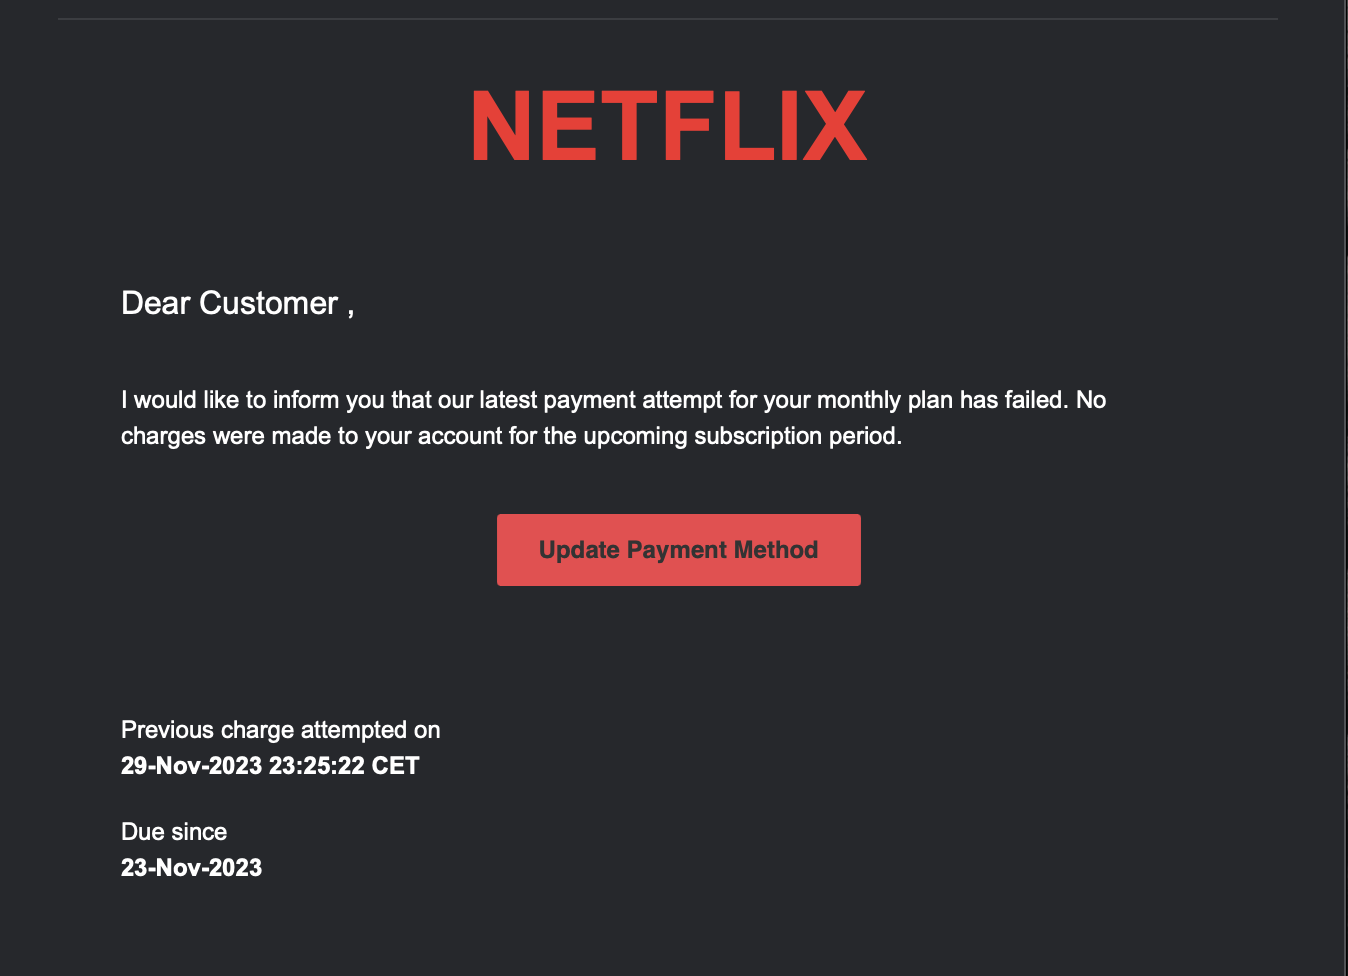 Netflix phishing attempt